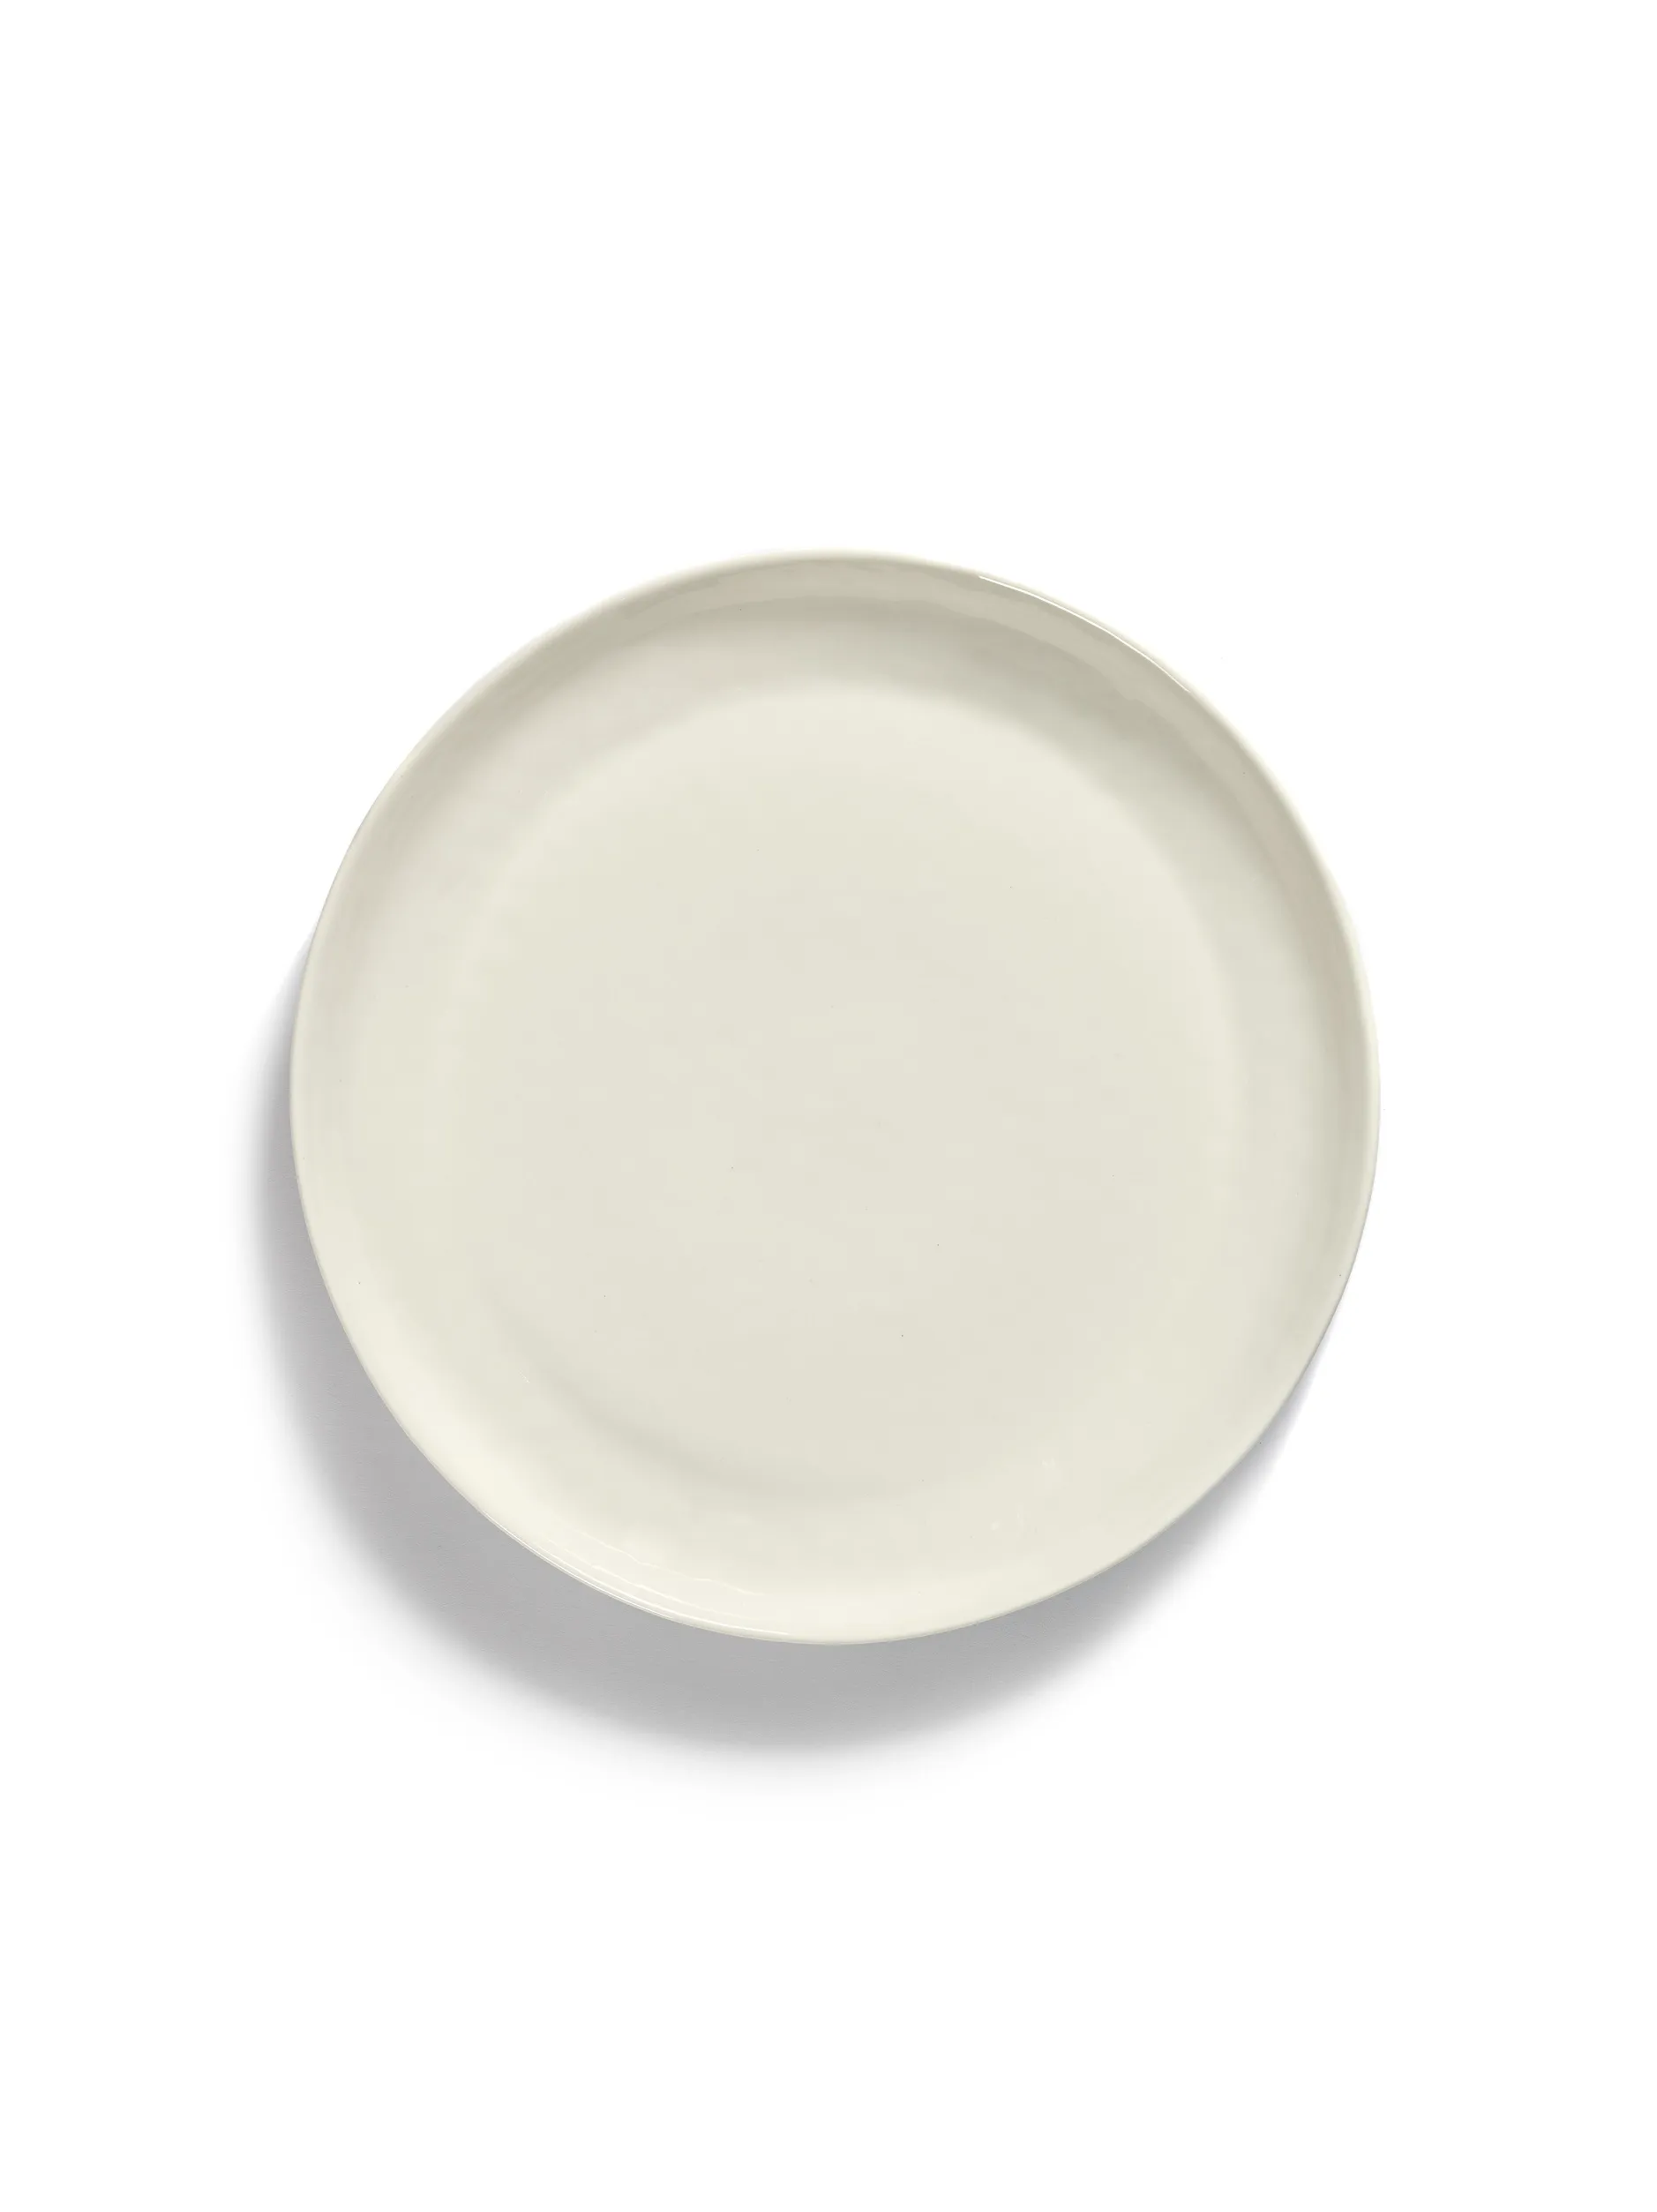 Serving Plate S White-Stripes Blue Feast Ottolenghi by Serax L 35 W 35 H 4 CM